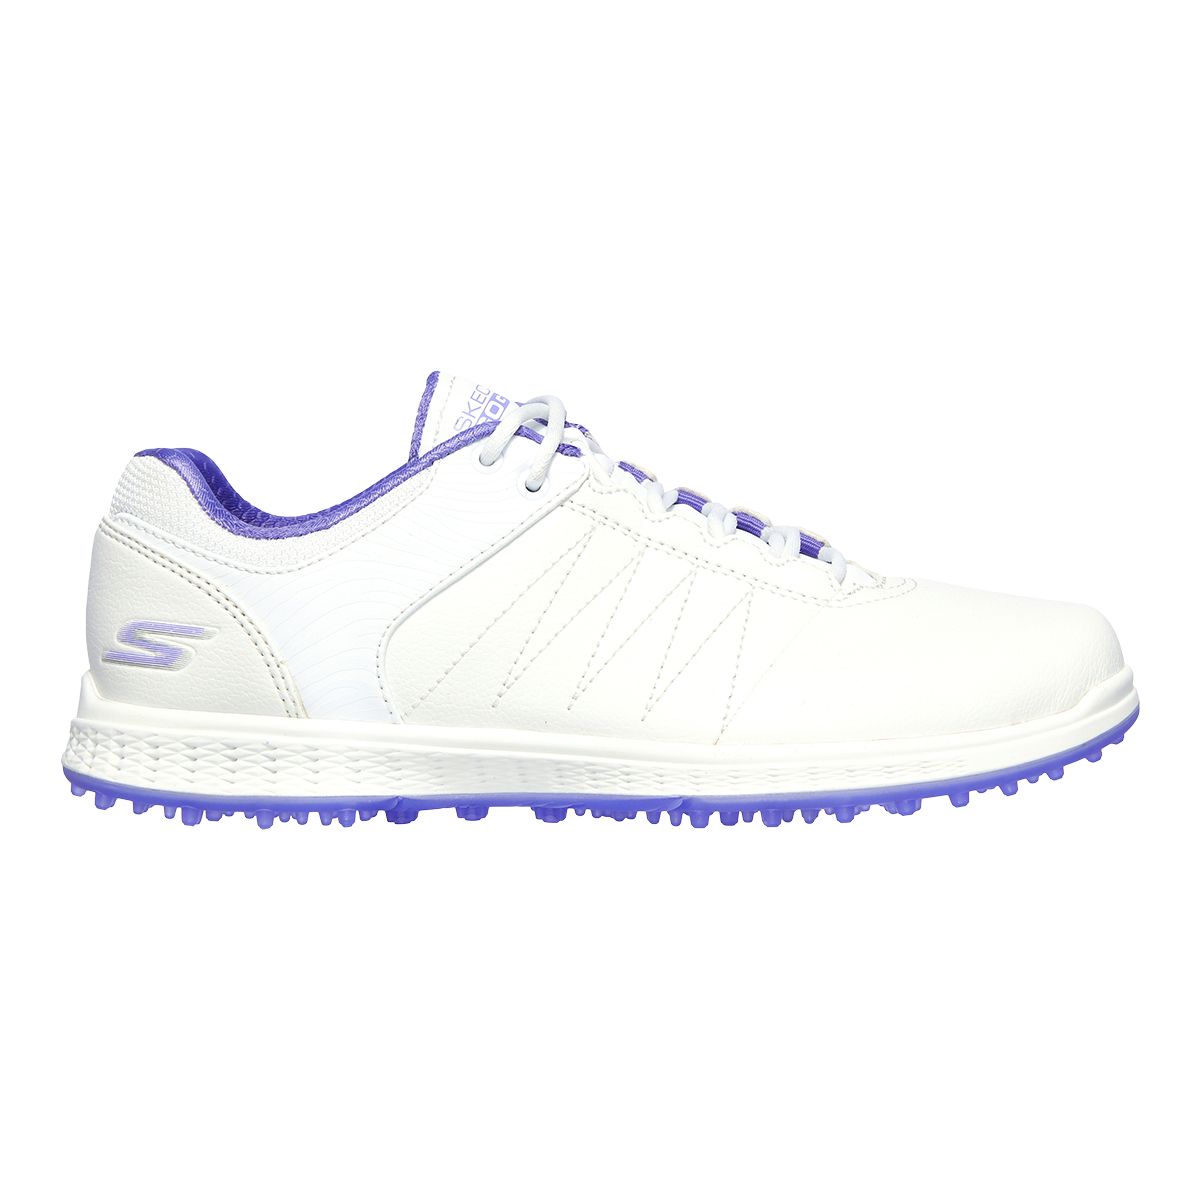 Image of Skechers Women's GO Golf Pivot Golf Shoes